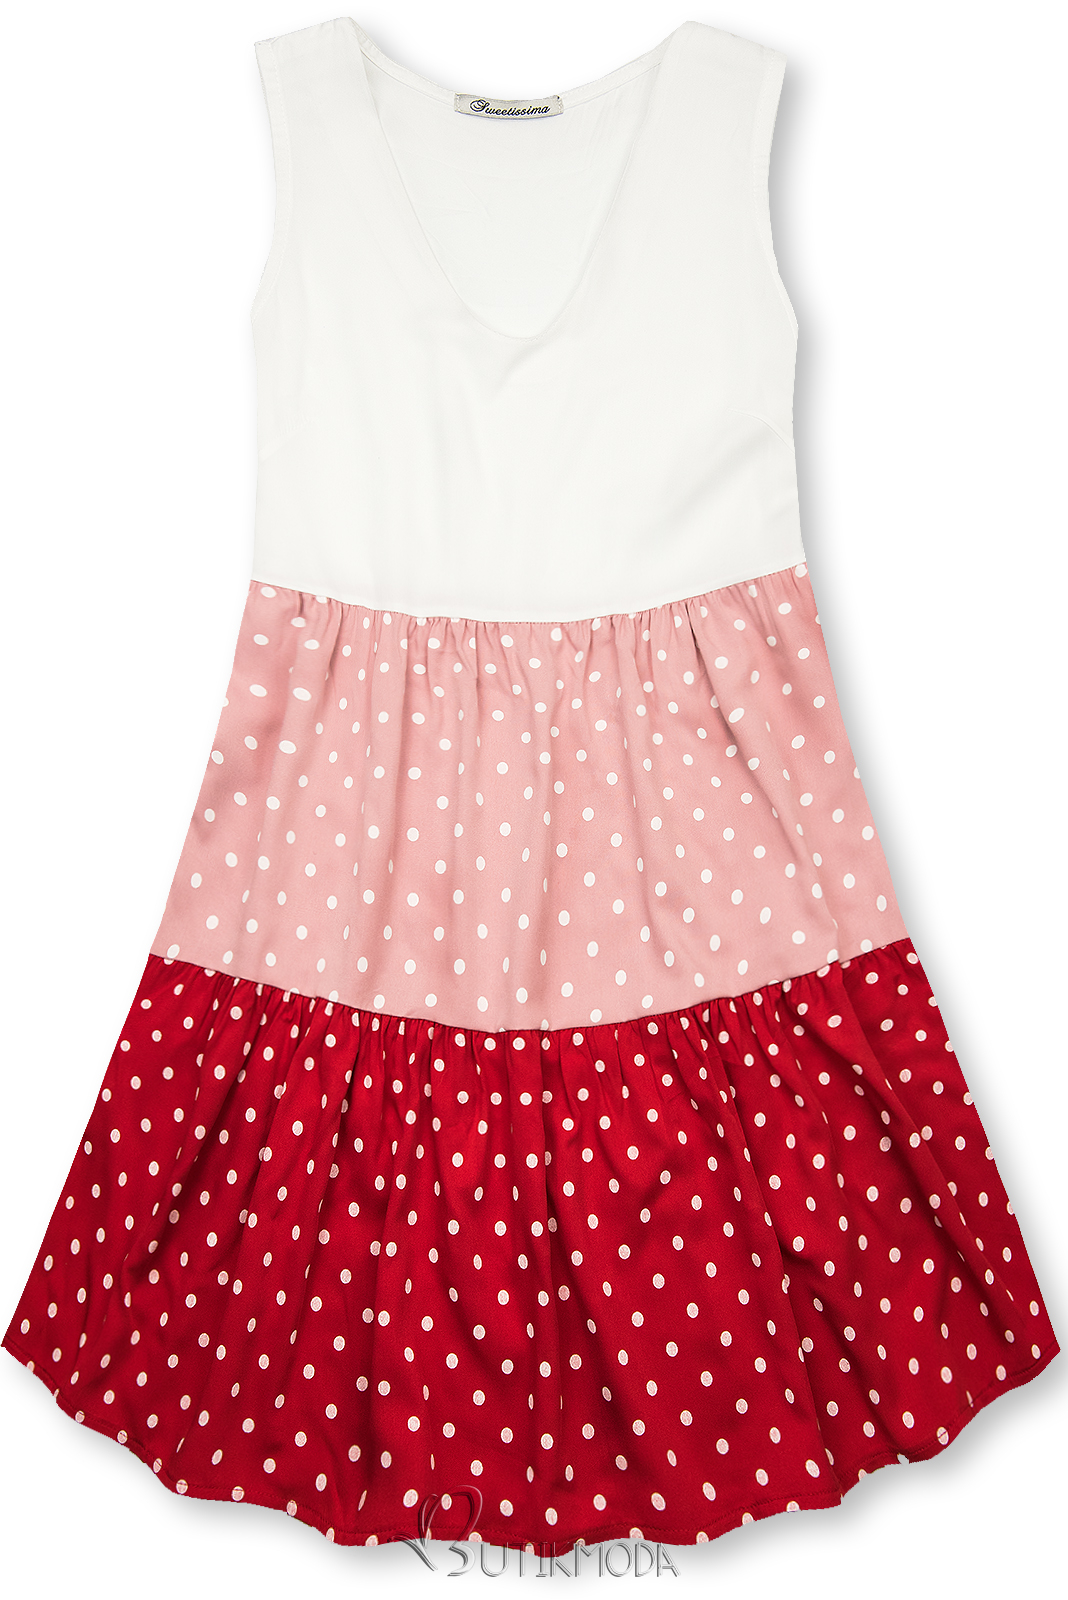 Rochie cu buline din viscoză albă/roz/roșie